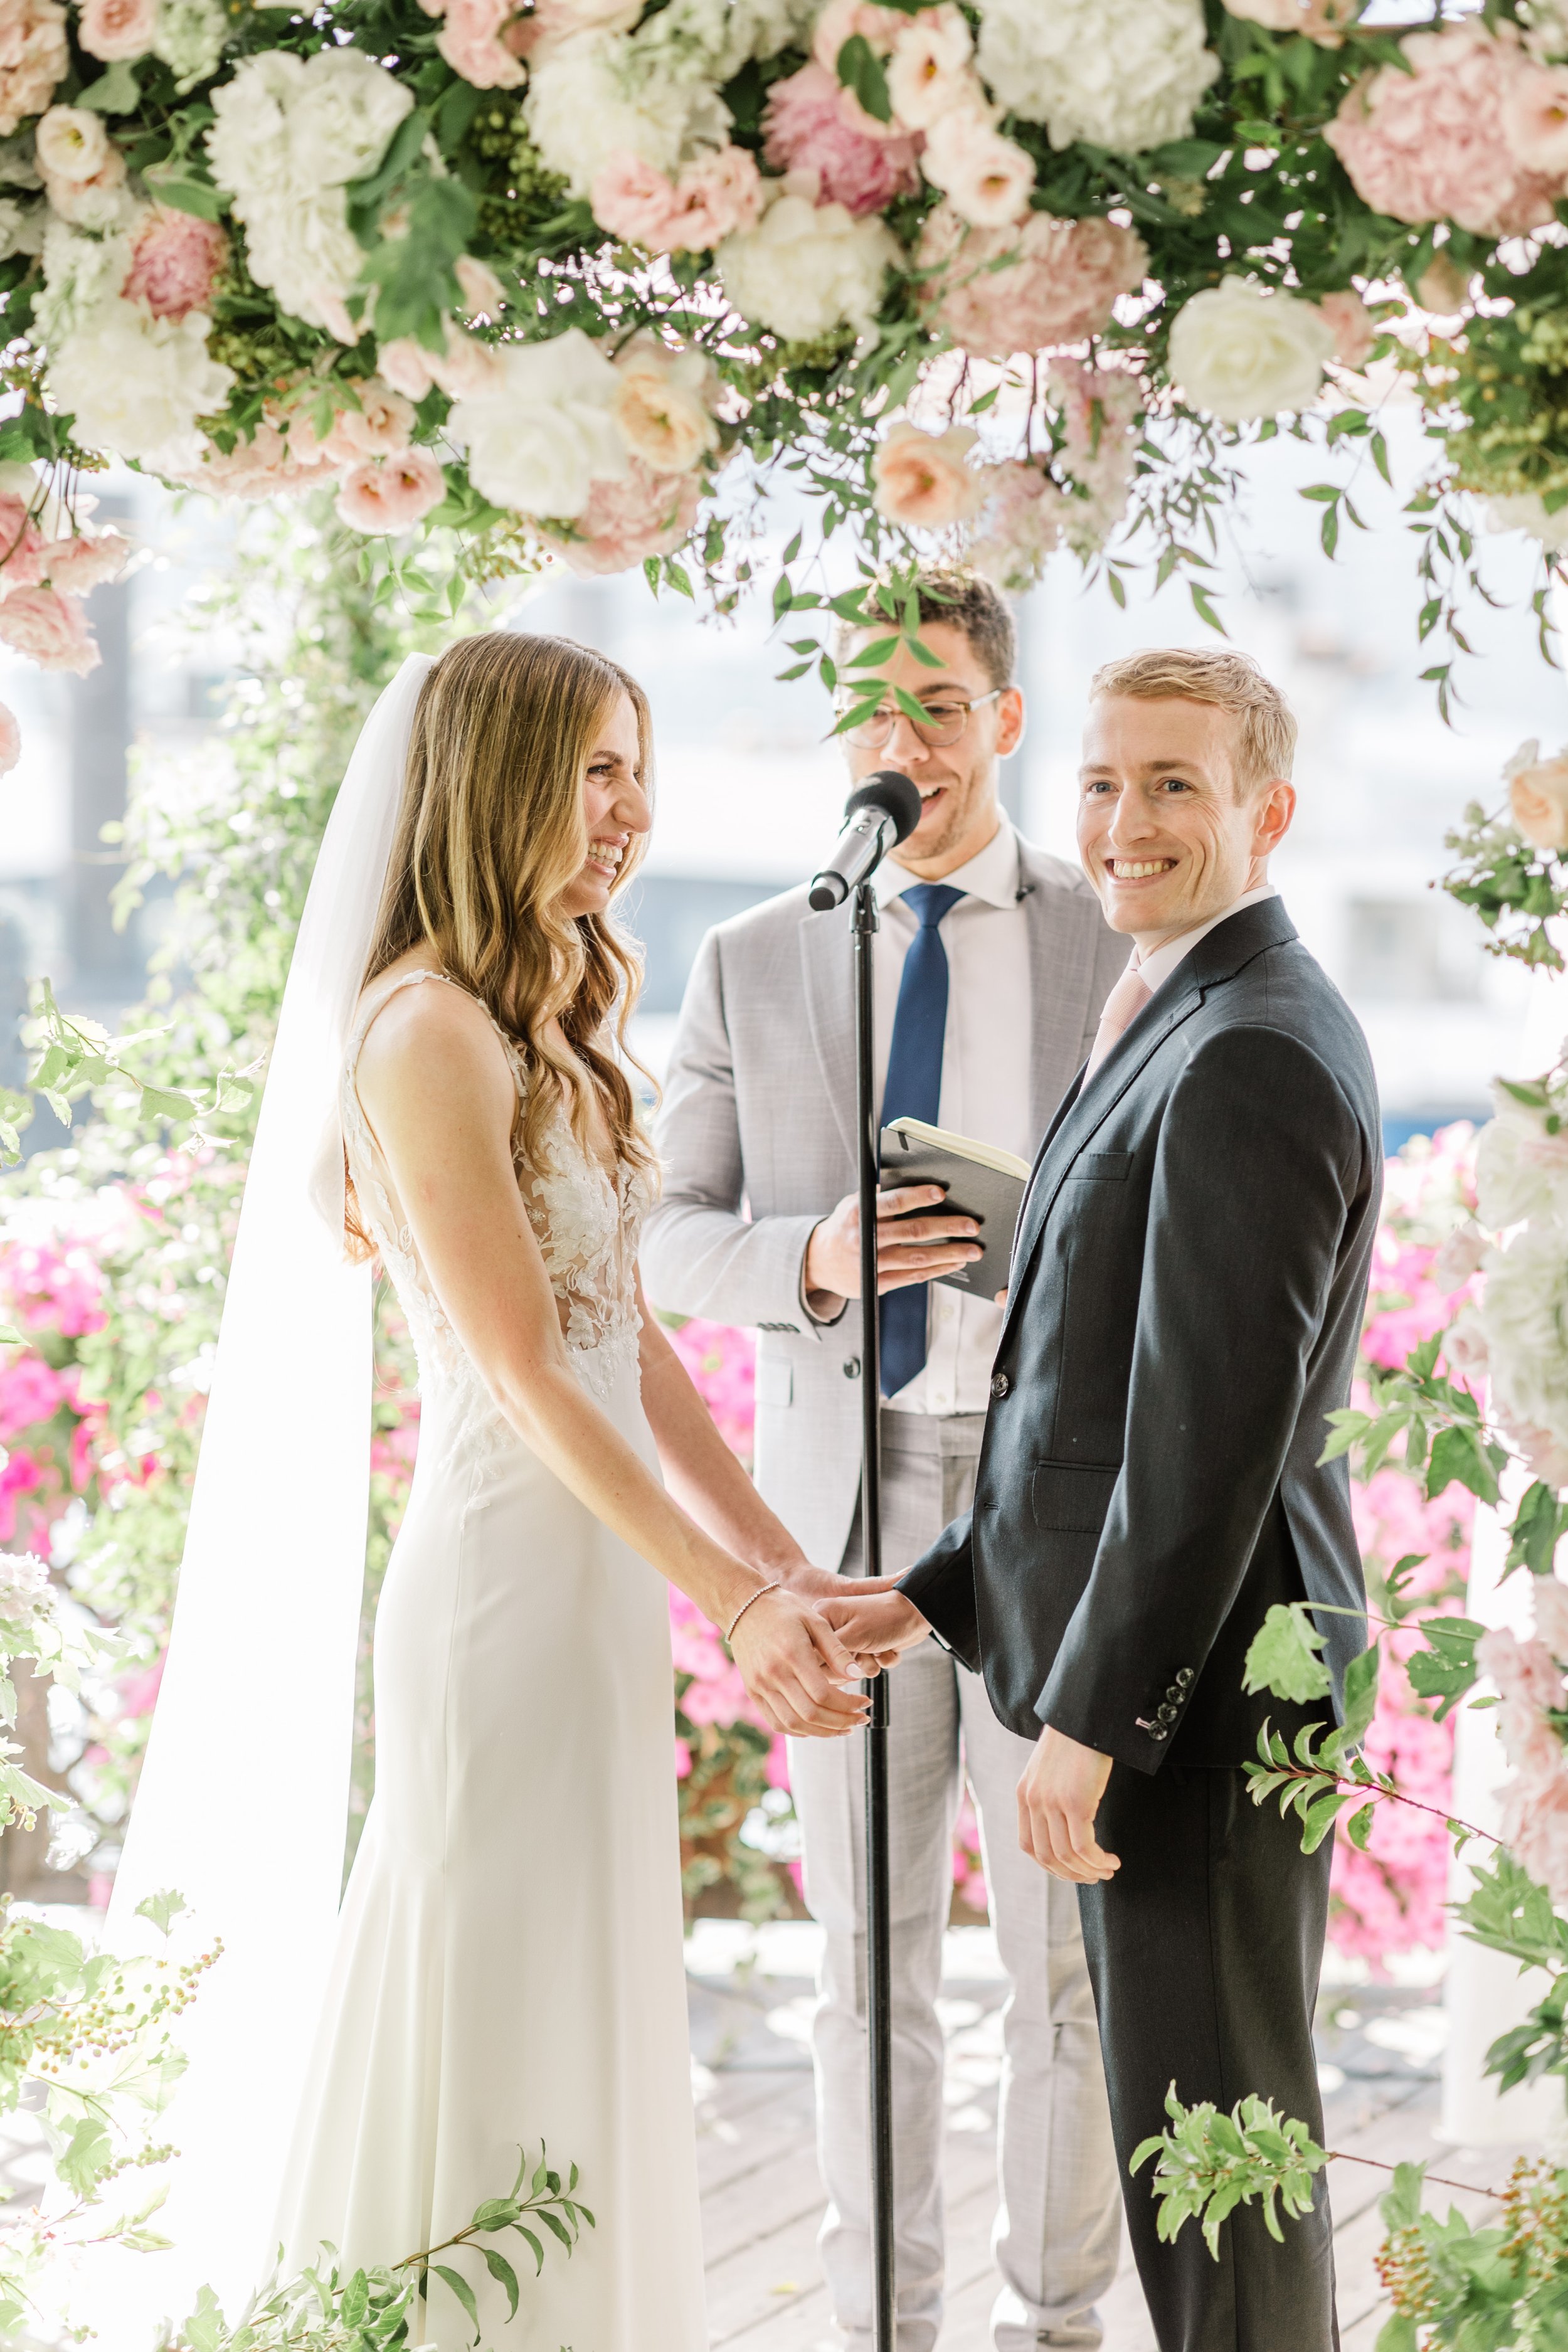 Danielle-Brady-Wedding-Favs-By-Lizzie-Burger-Photo-59.jpg